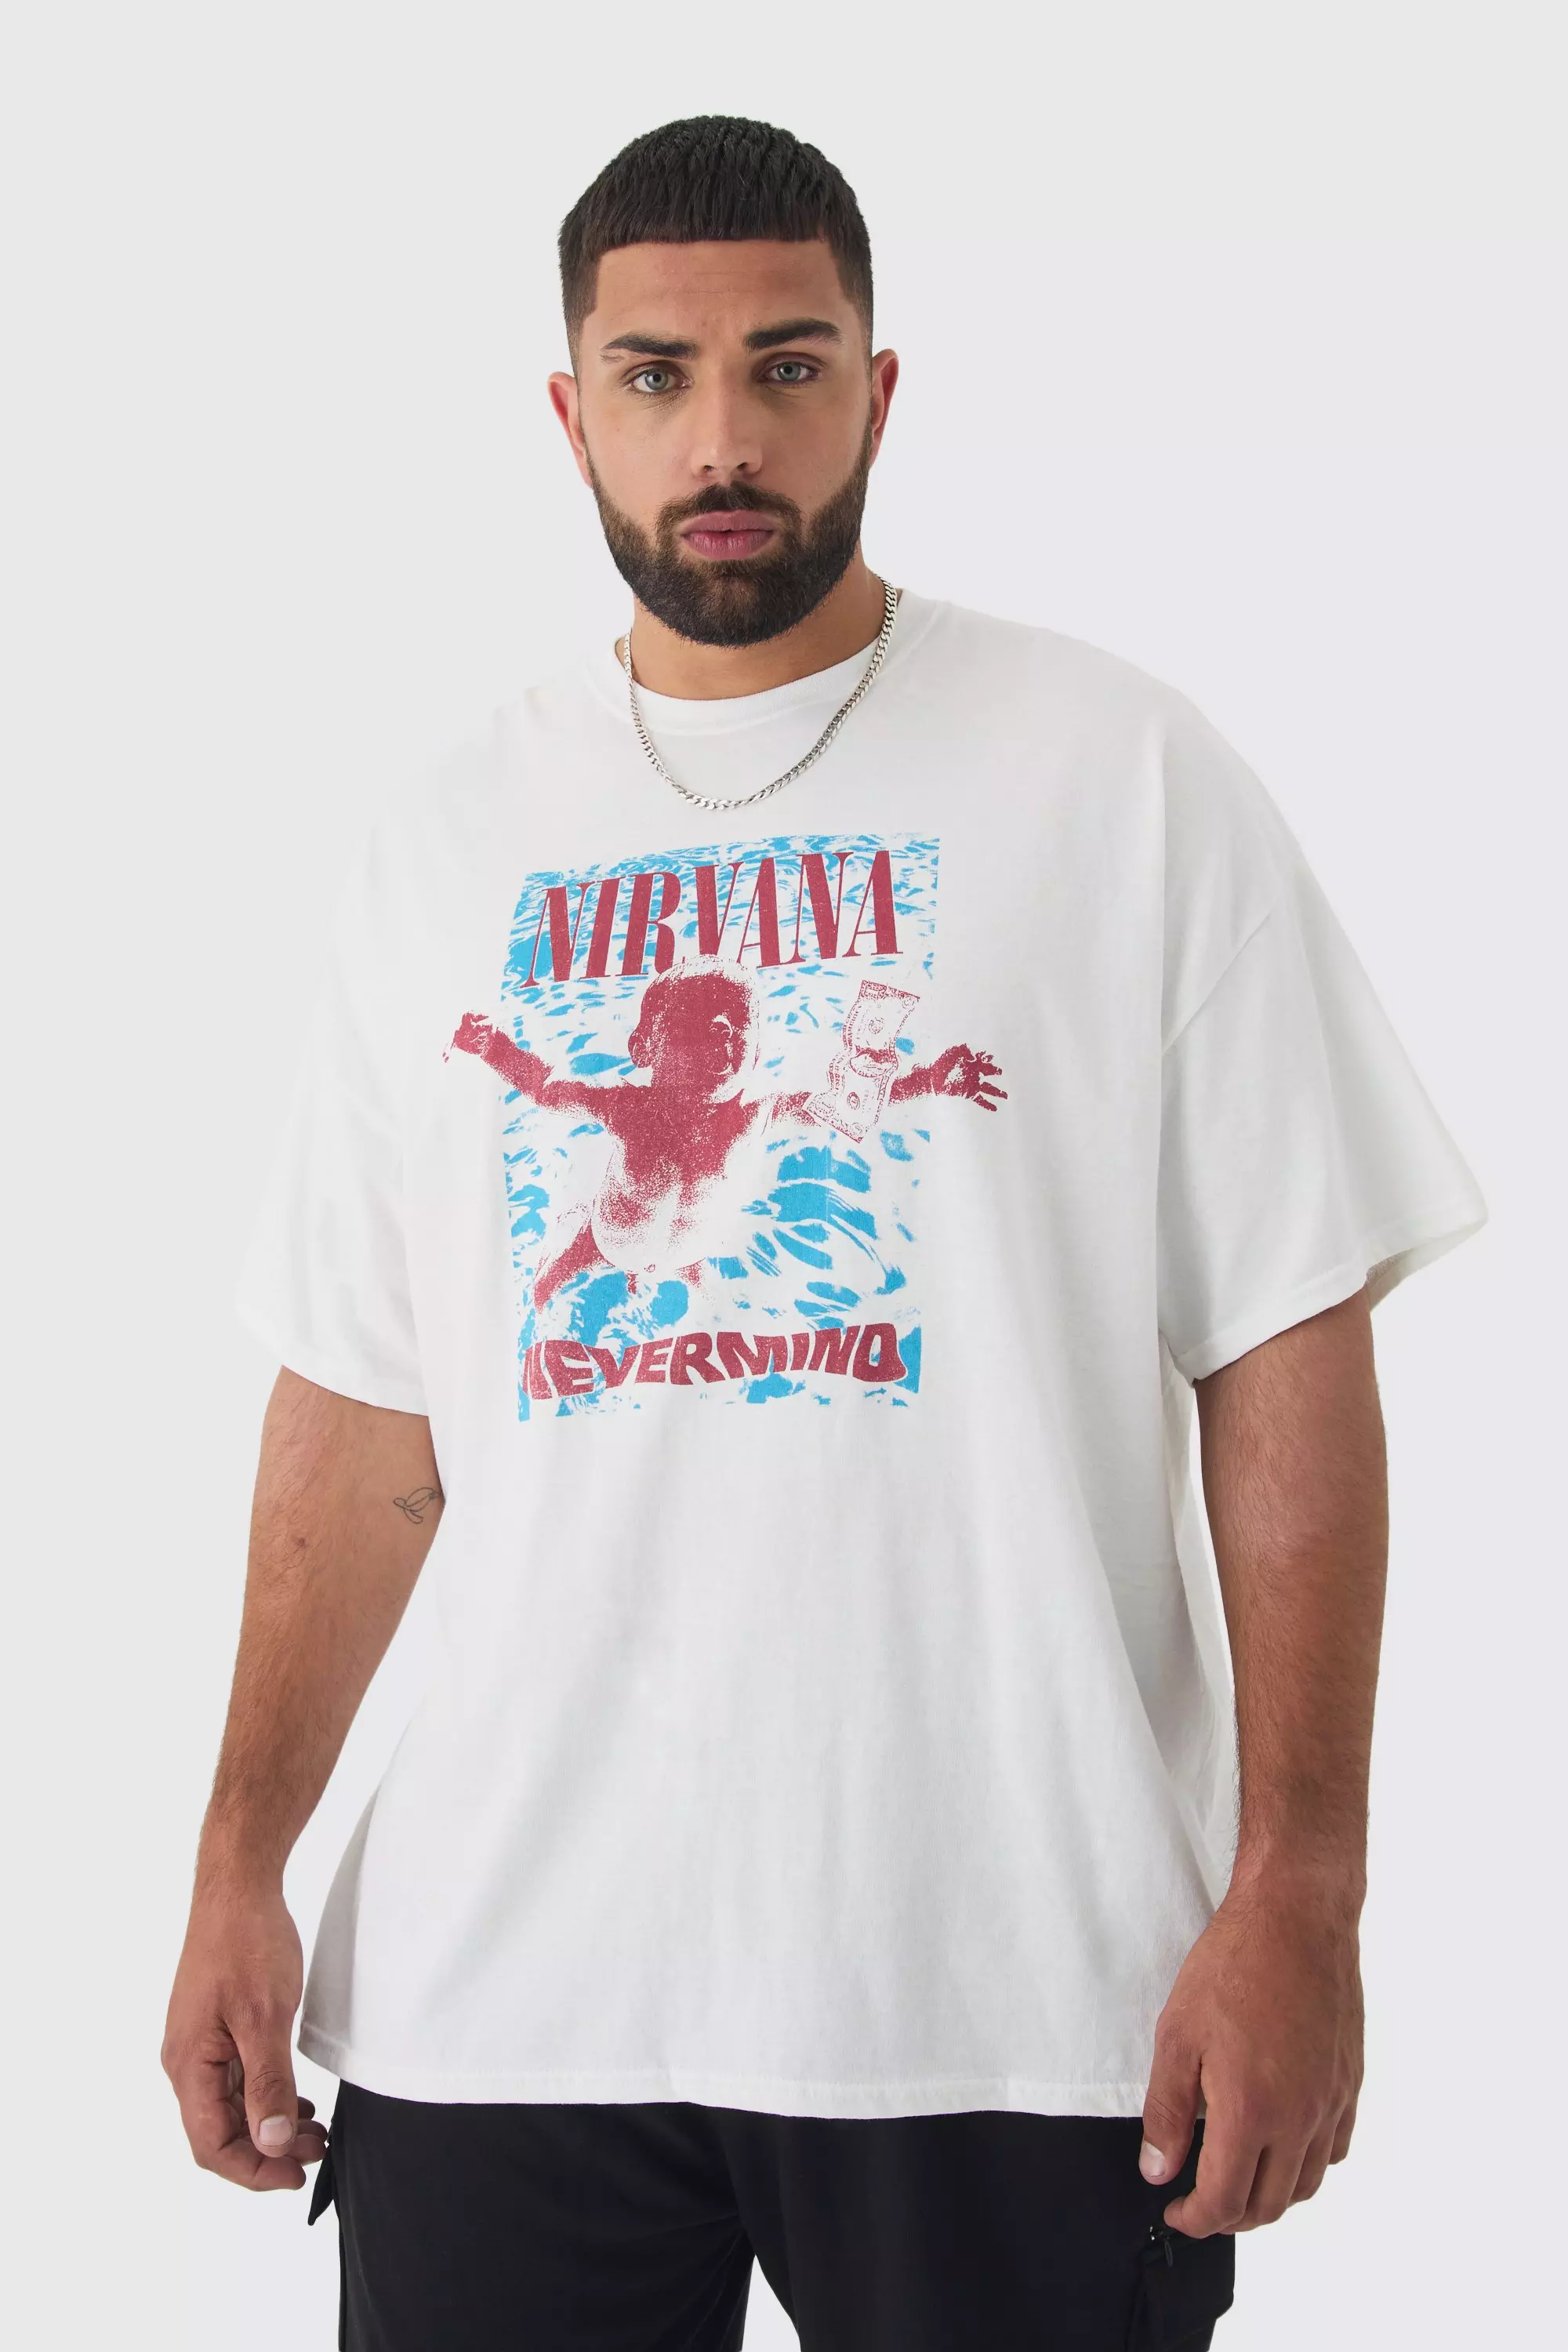 Plus Nirvana Nevermind License T-shirt White